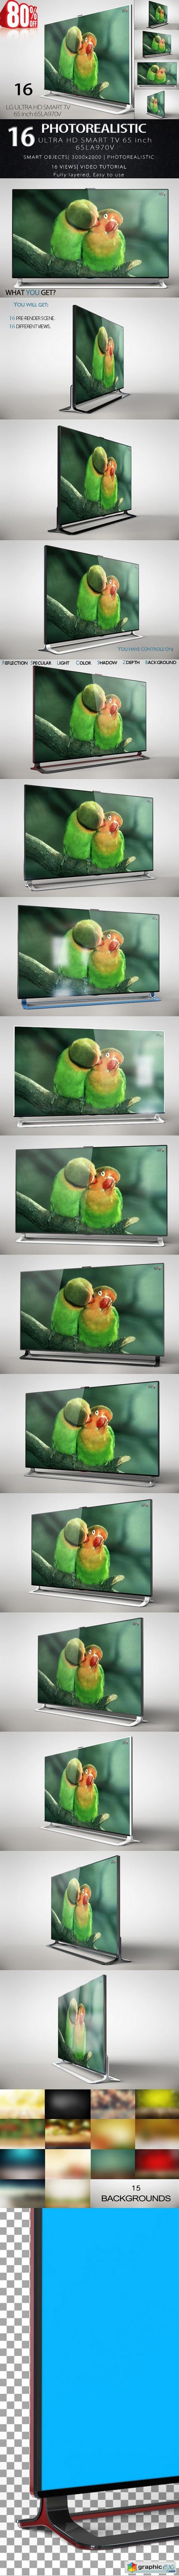 Bundle LG Ultra HD Smart Tv 65 inch